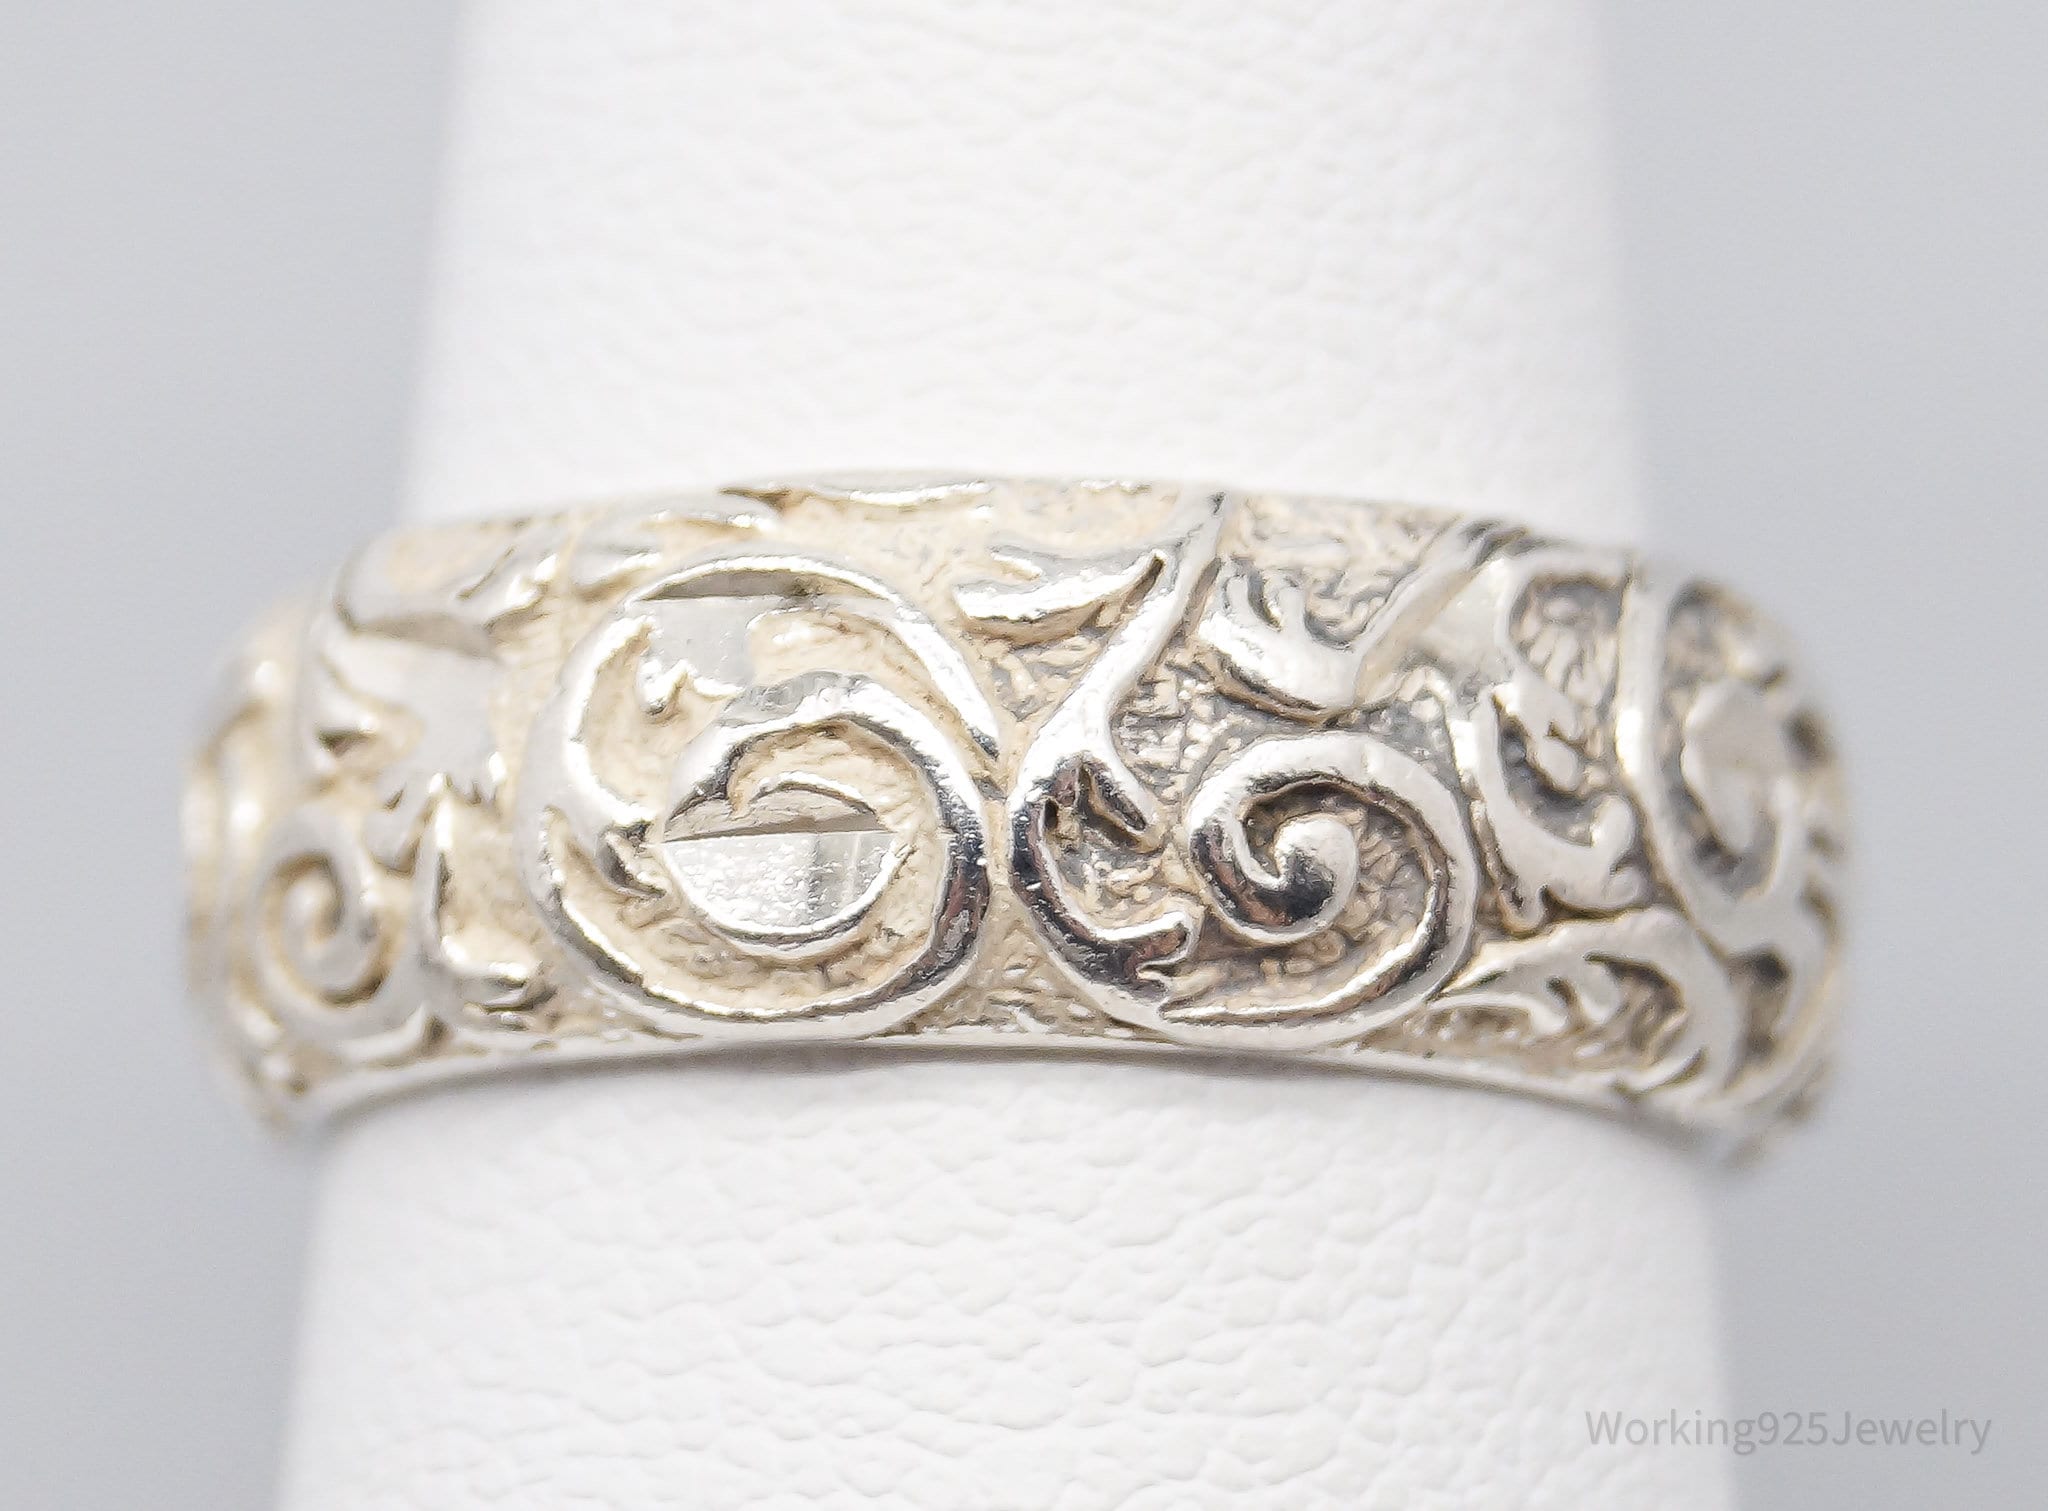 Vintage Native Designer Carolyn Pollack Relios Sterling Silver Ring - Size 6